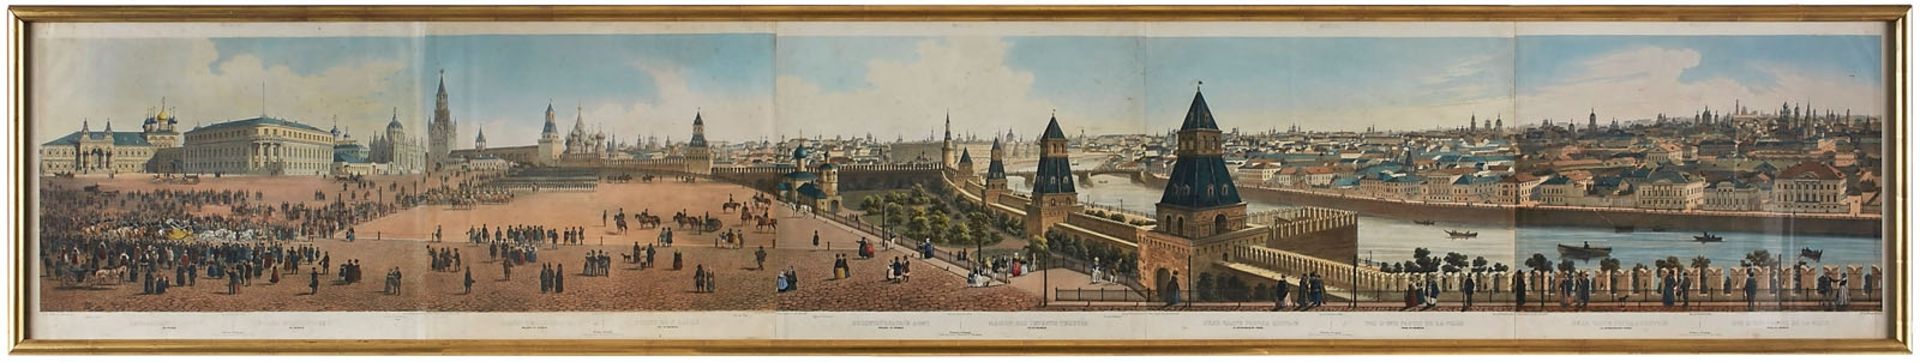 Philippe Benoist "Panorama der Stadt Moskau" - Image 2 of 3